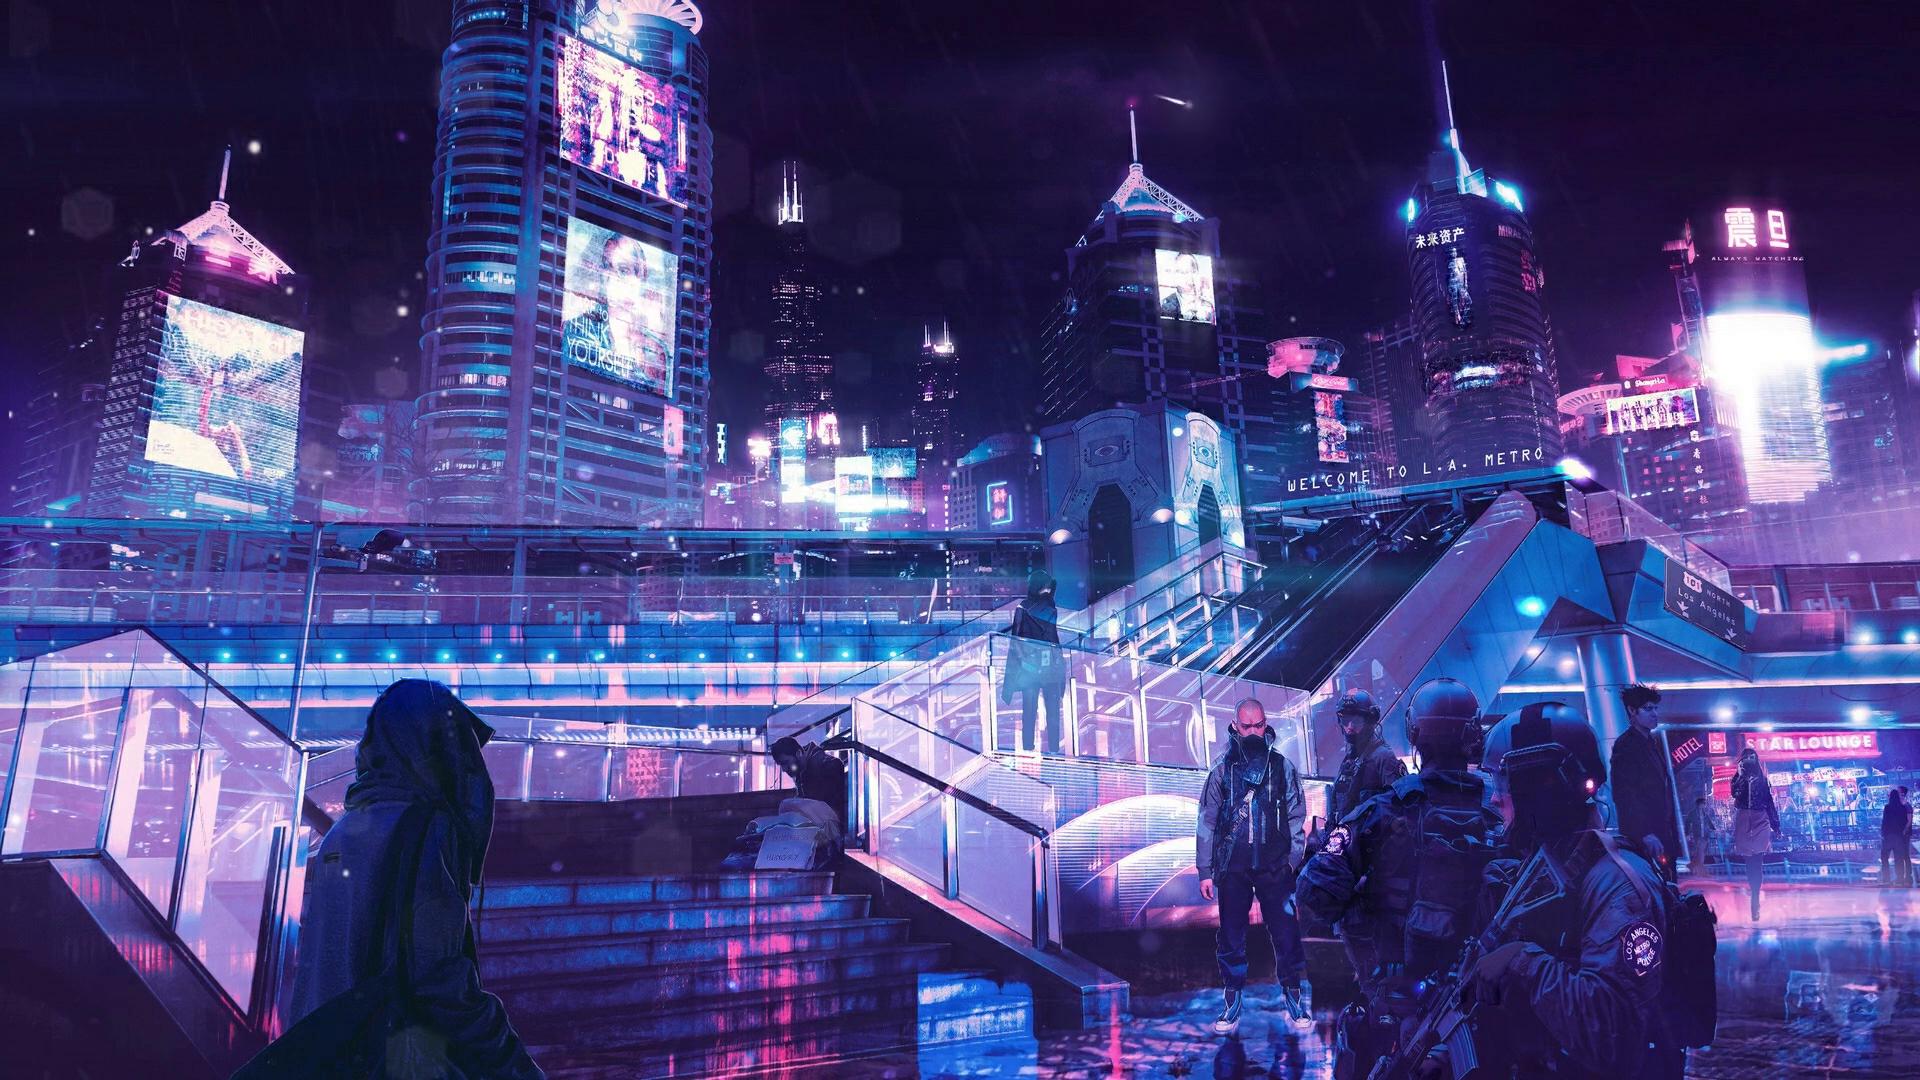 Futuristic And Aesthetic Cyberpunk City Live Wallpaper